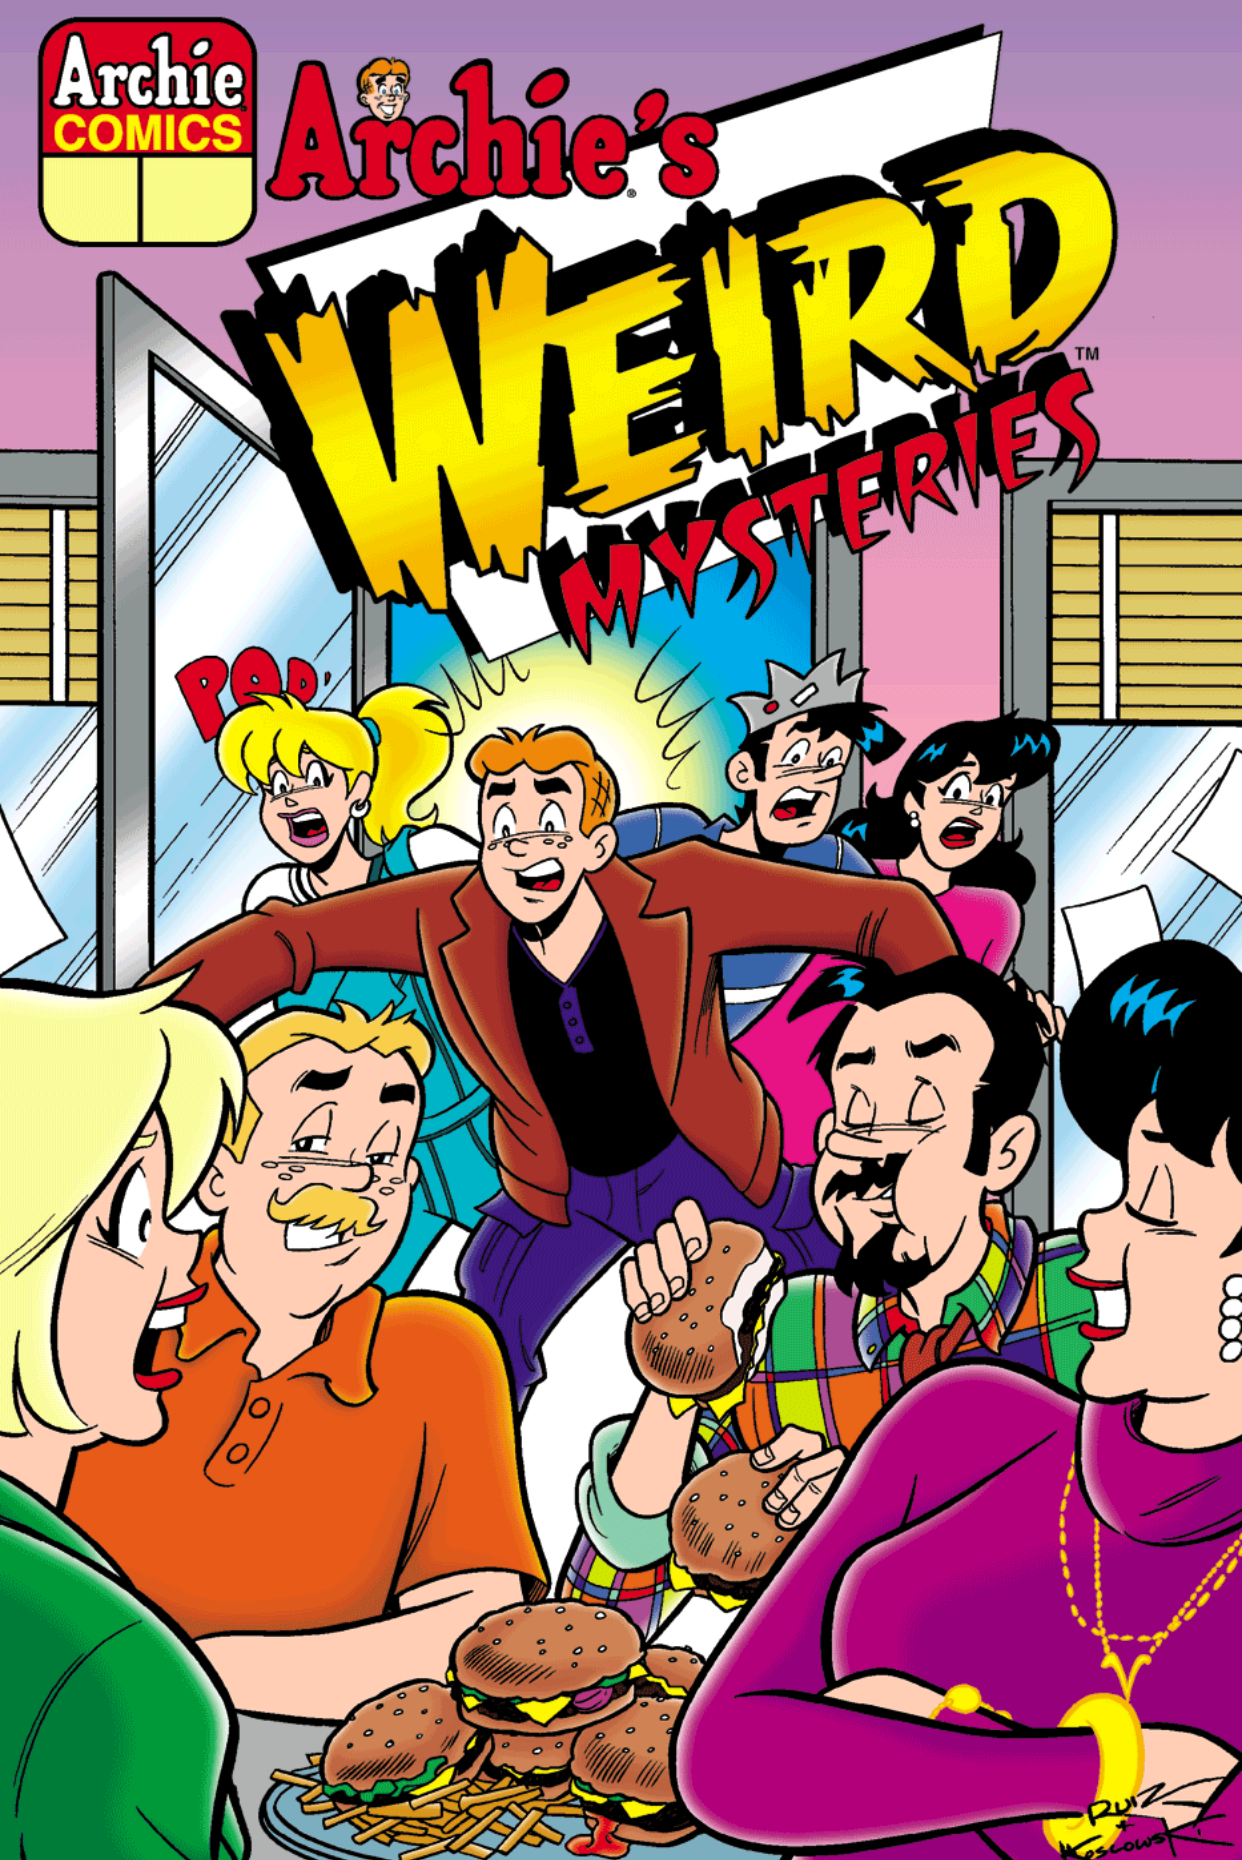 Weirdest Mysteries Archie Porn - Archie S Weird Mysteries Issue 5 | Read Archie S Weird Mysteries Issue 5  comic online in high quality. Read Full Comic online for free - Read comics  online in high quality .| READ COMIC ONLINE